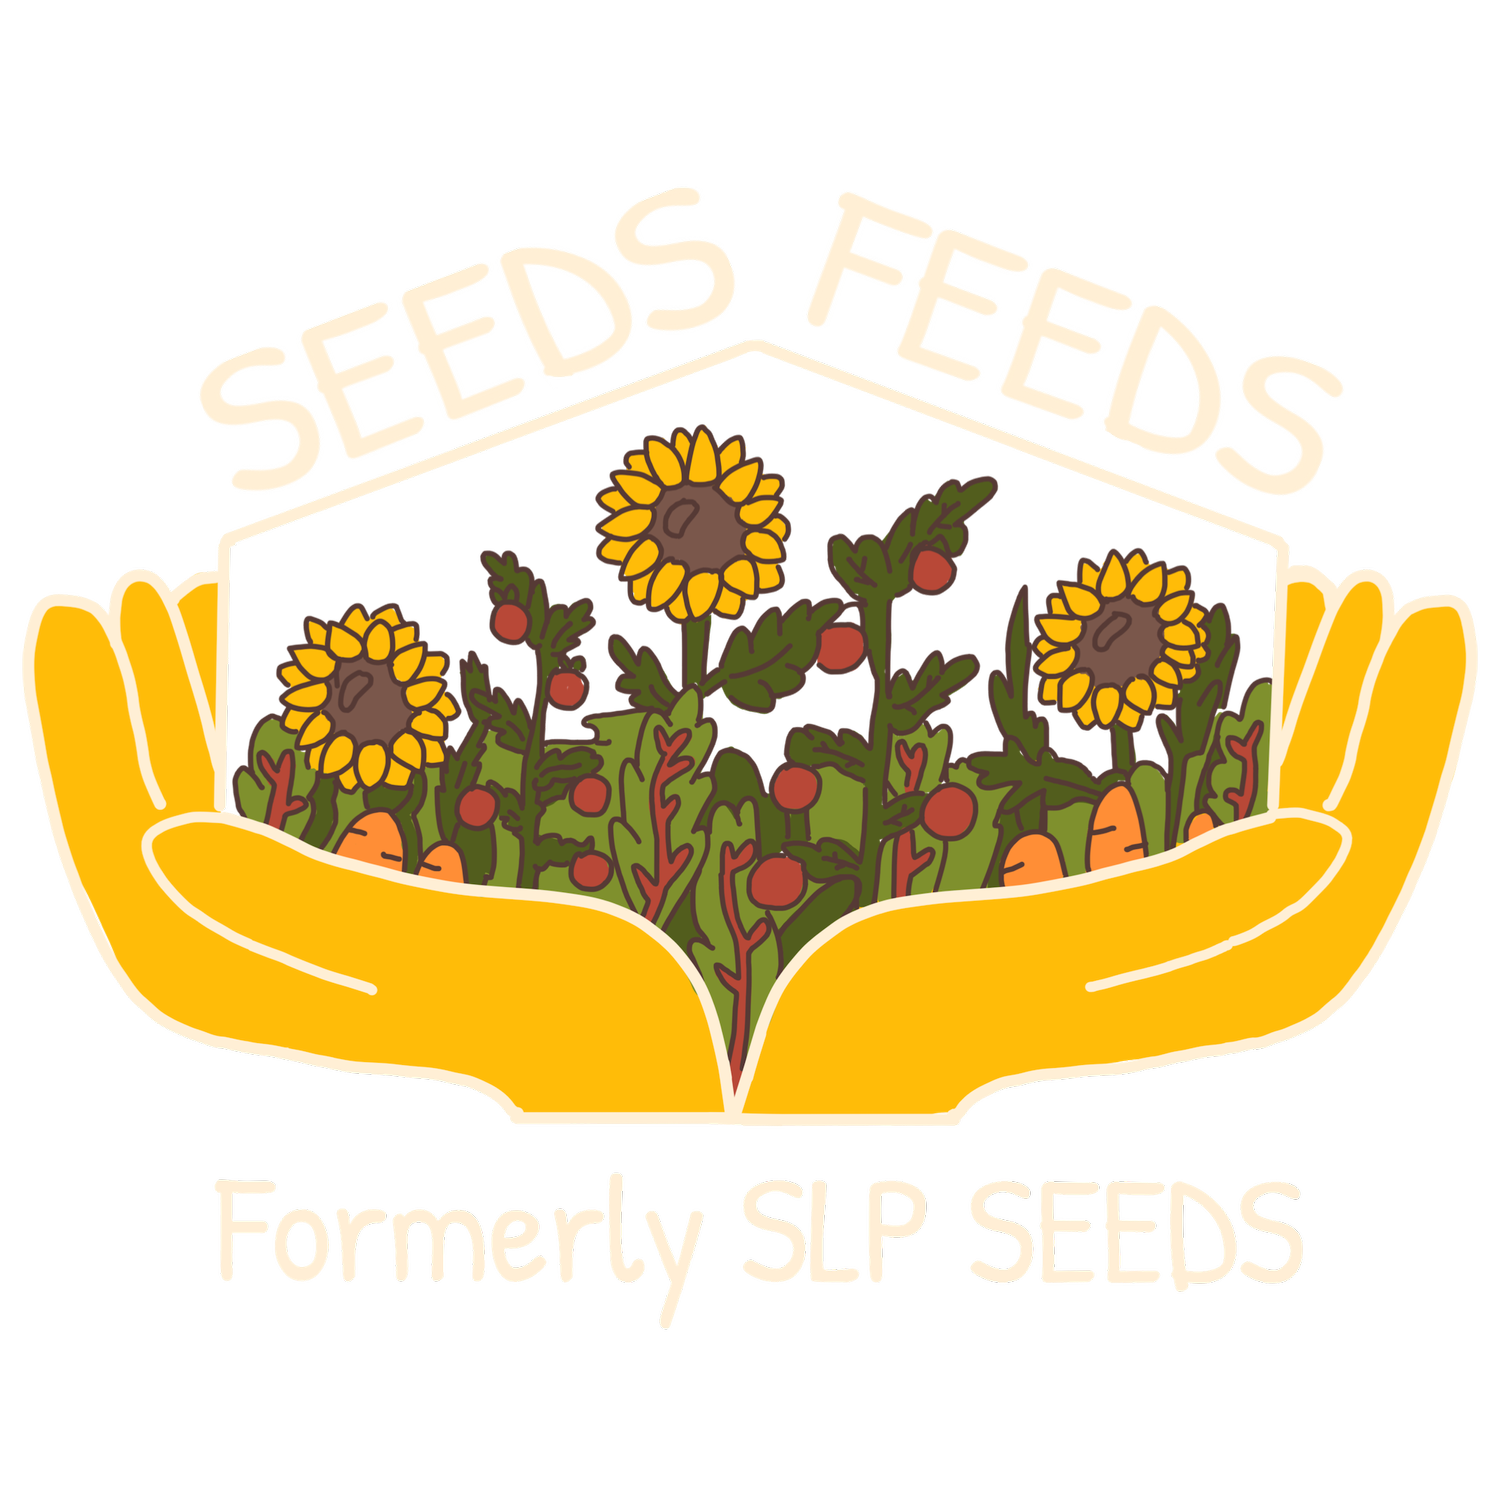 Seeds Feeds